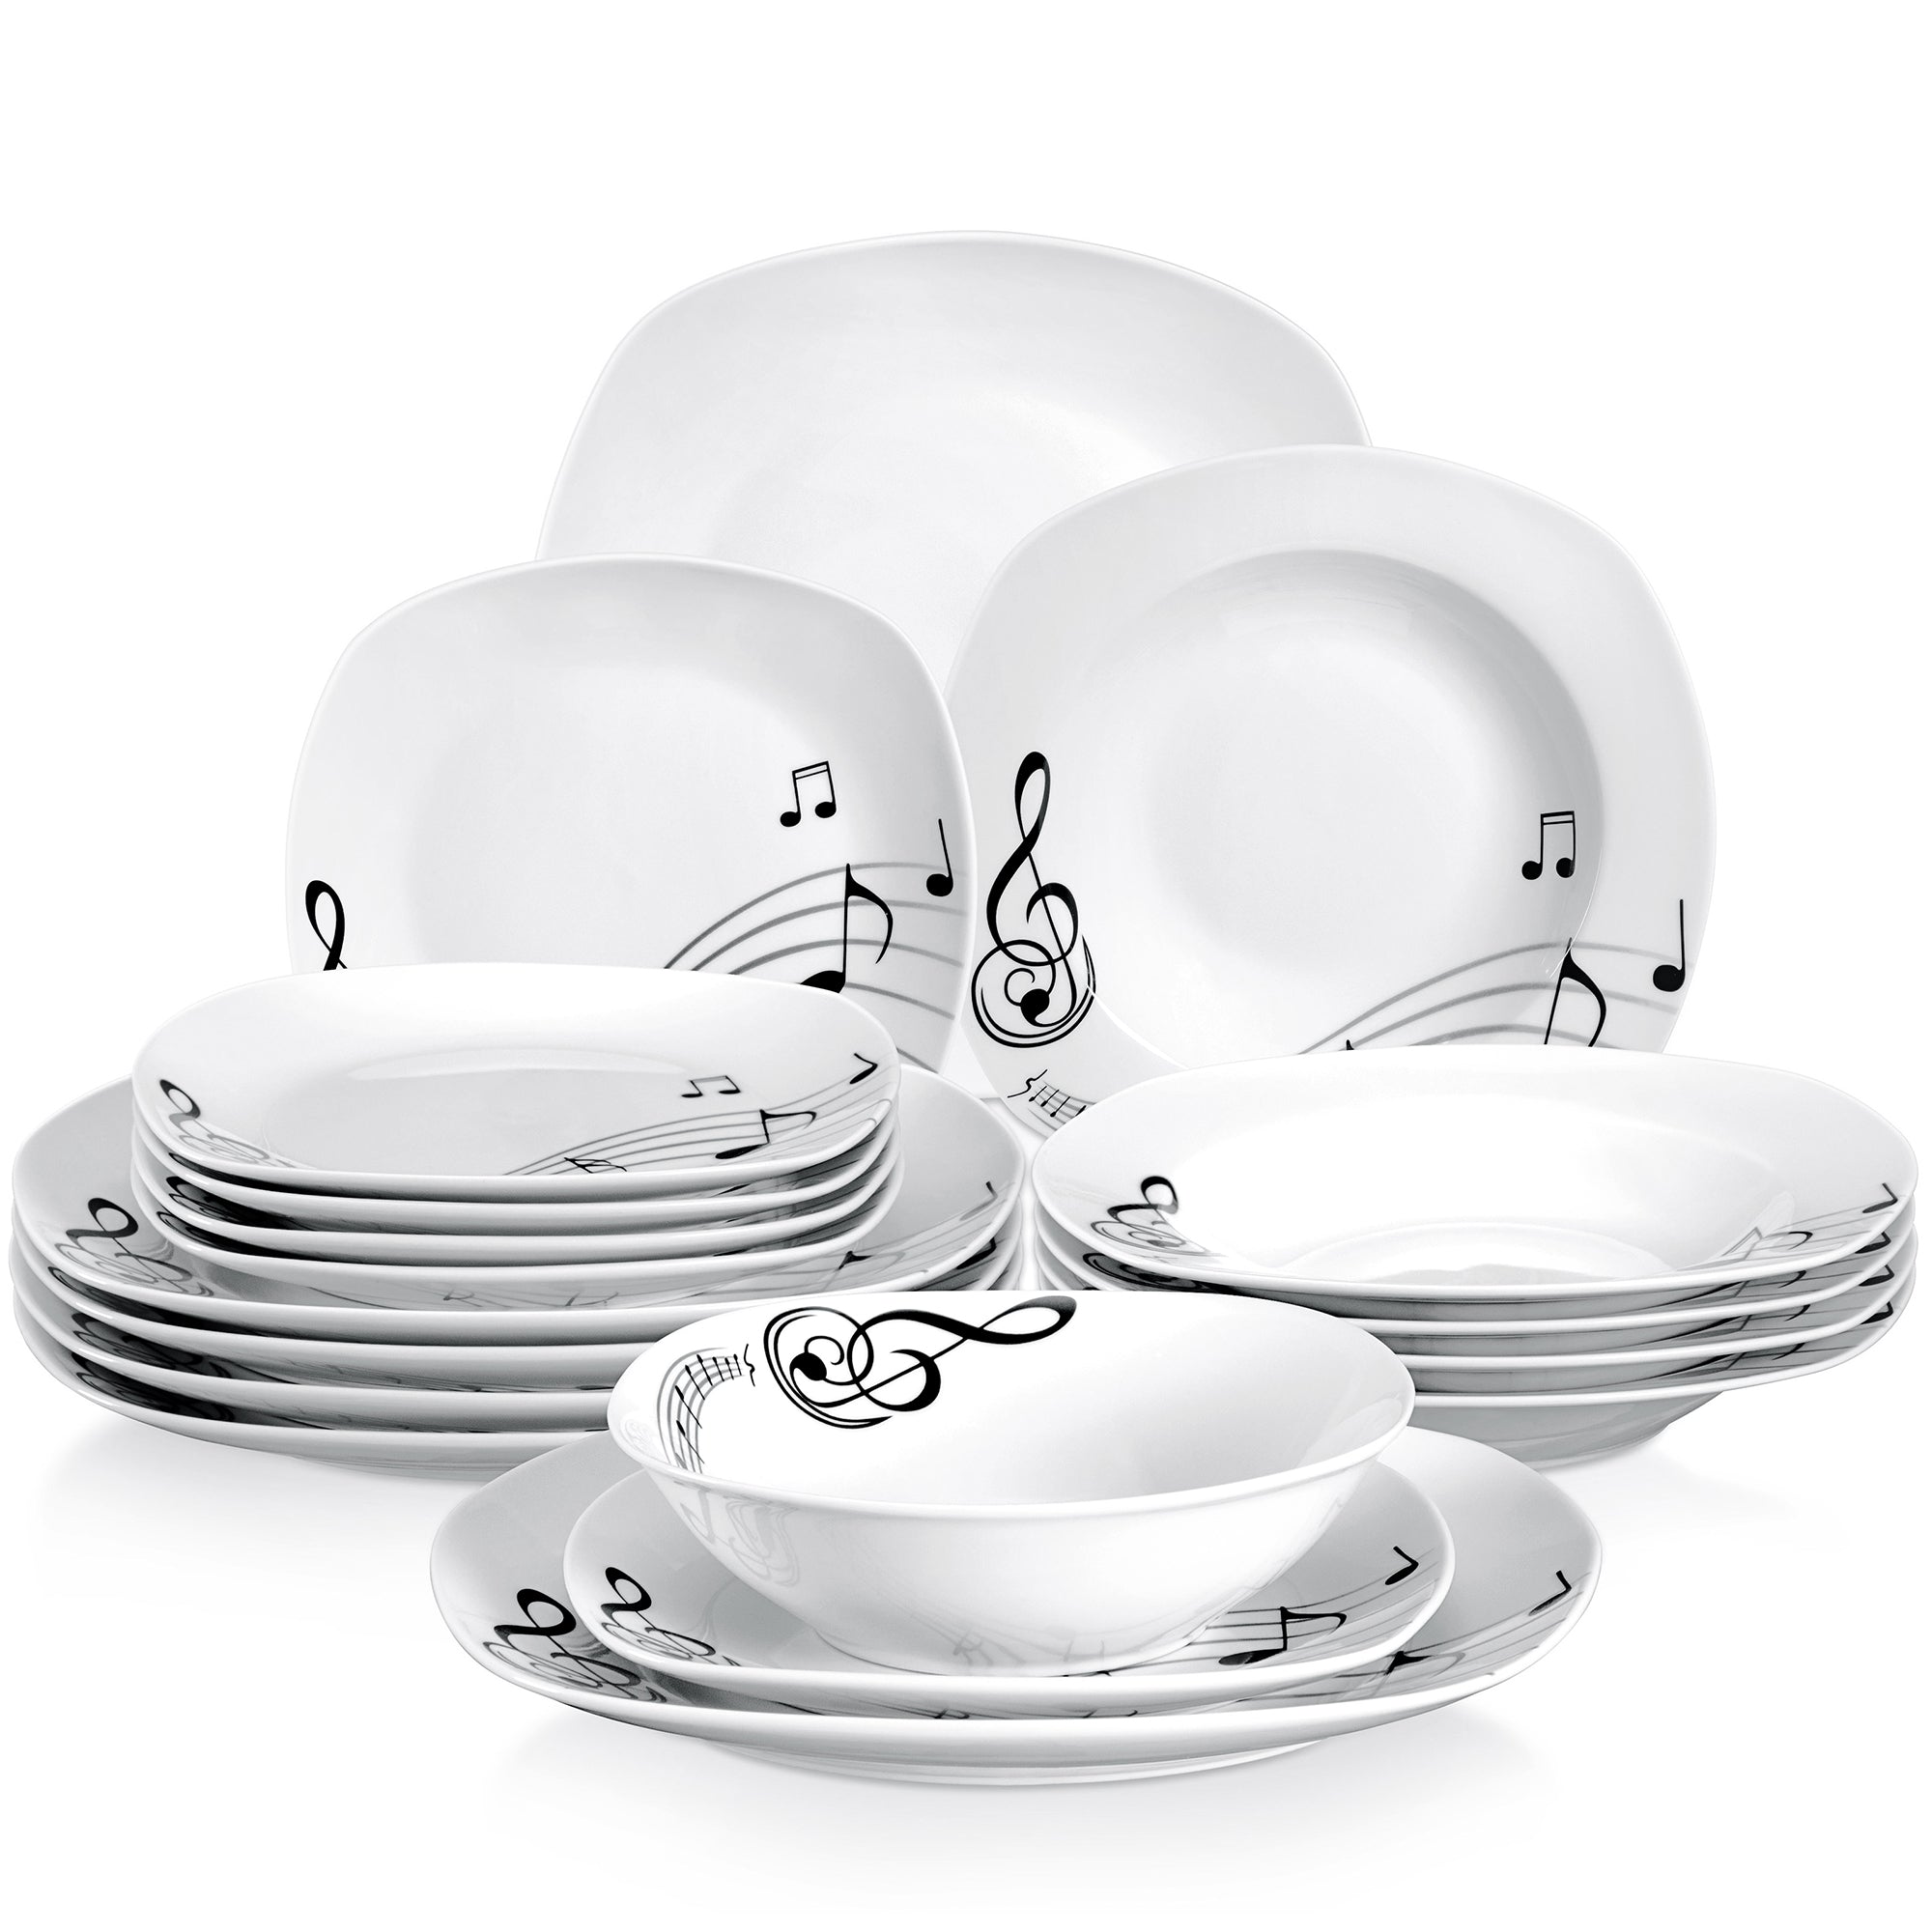 MALACASA 18-Piece White Porcelain Dinnerware in the Dinnerware